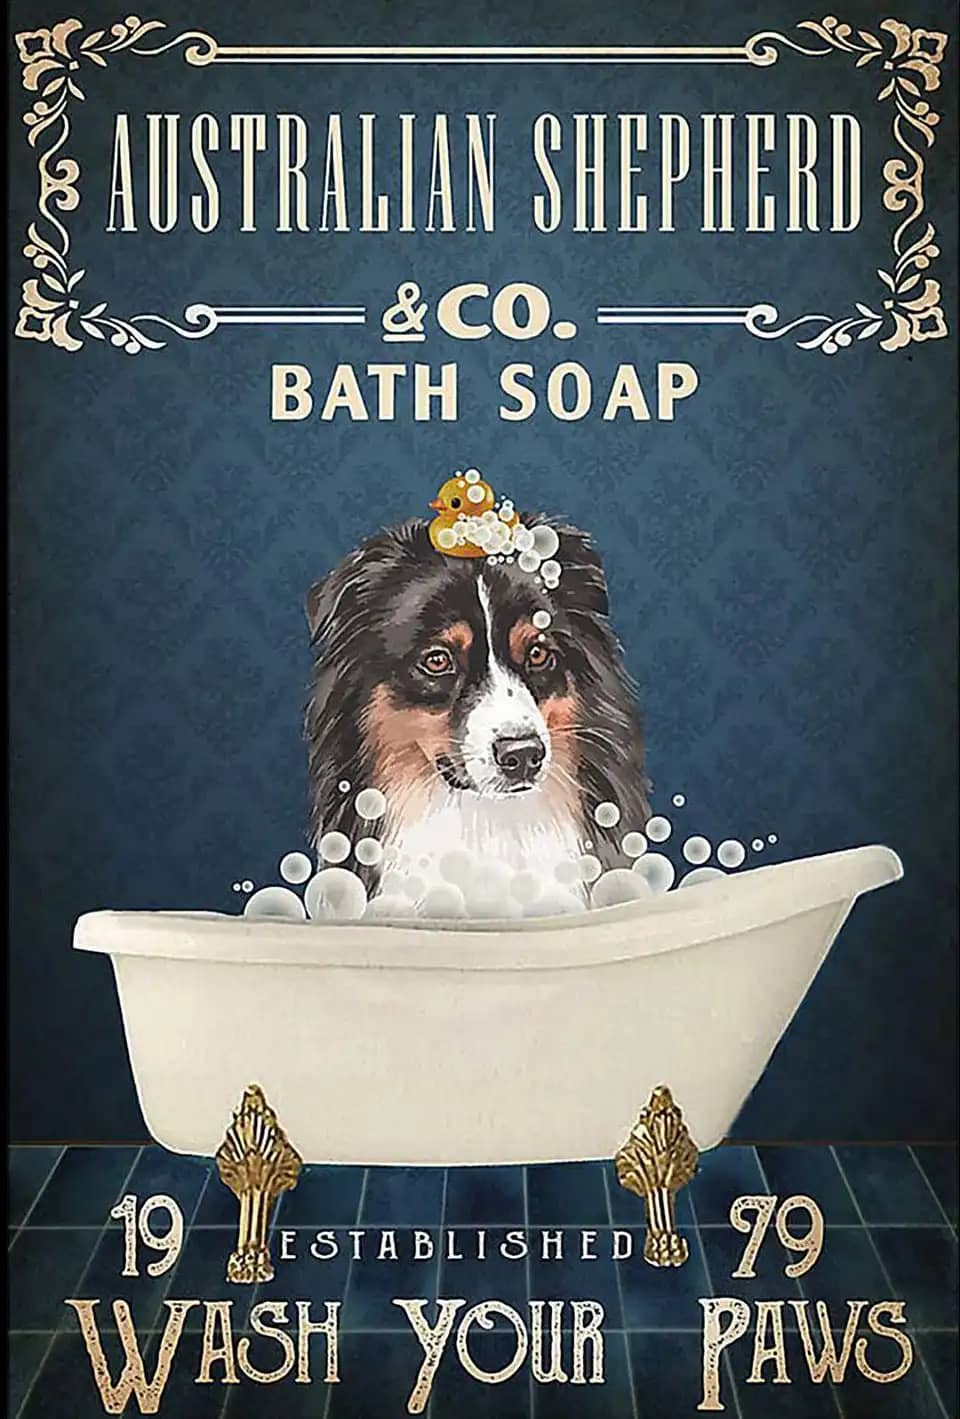 Australian Shepherd Co Bath Soap Wash Your Paws Poster